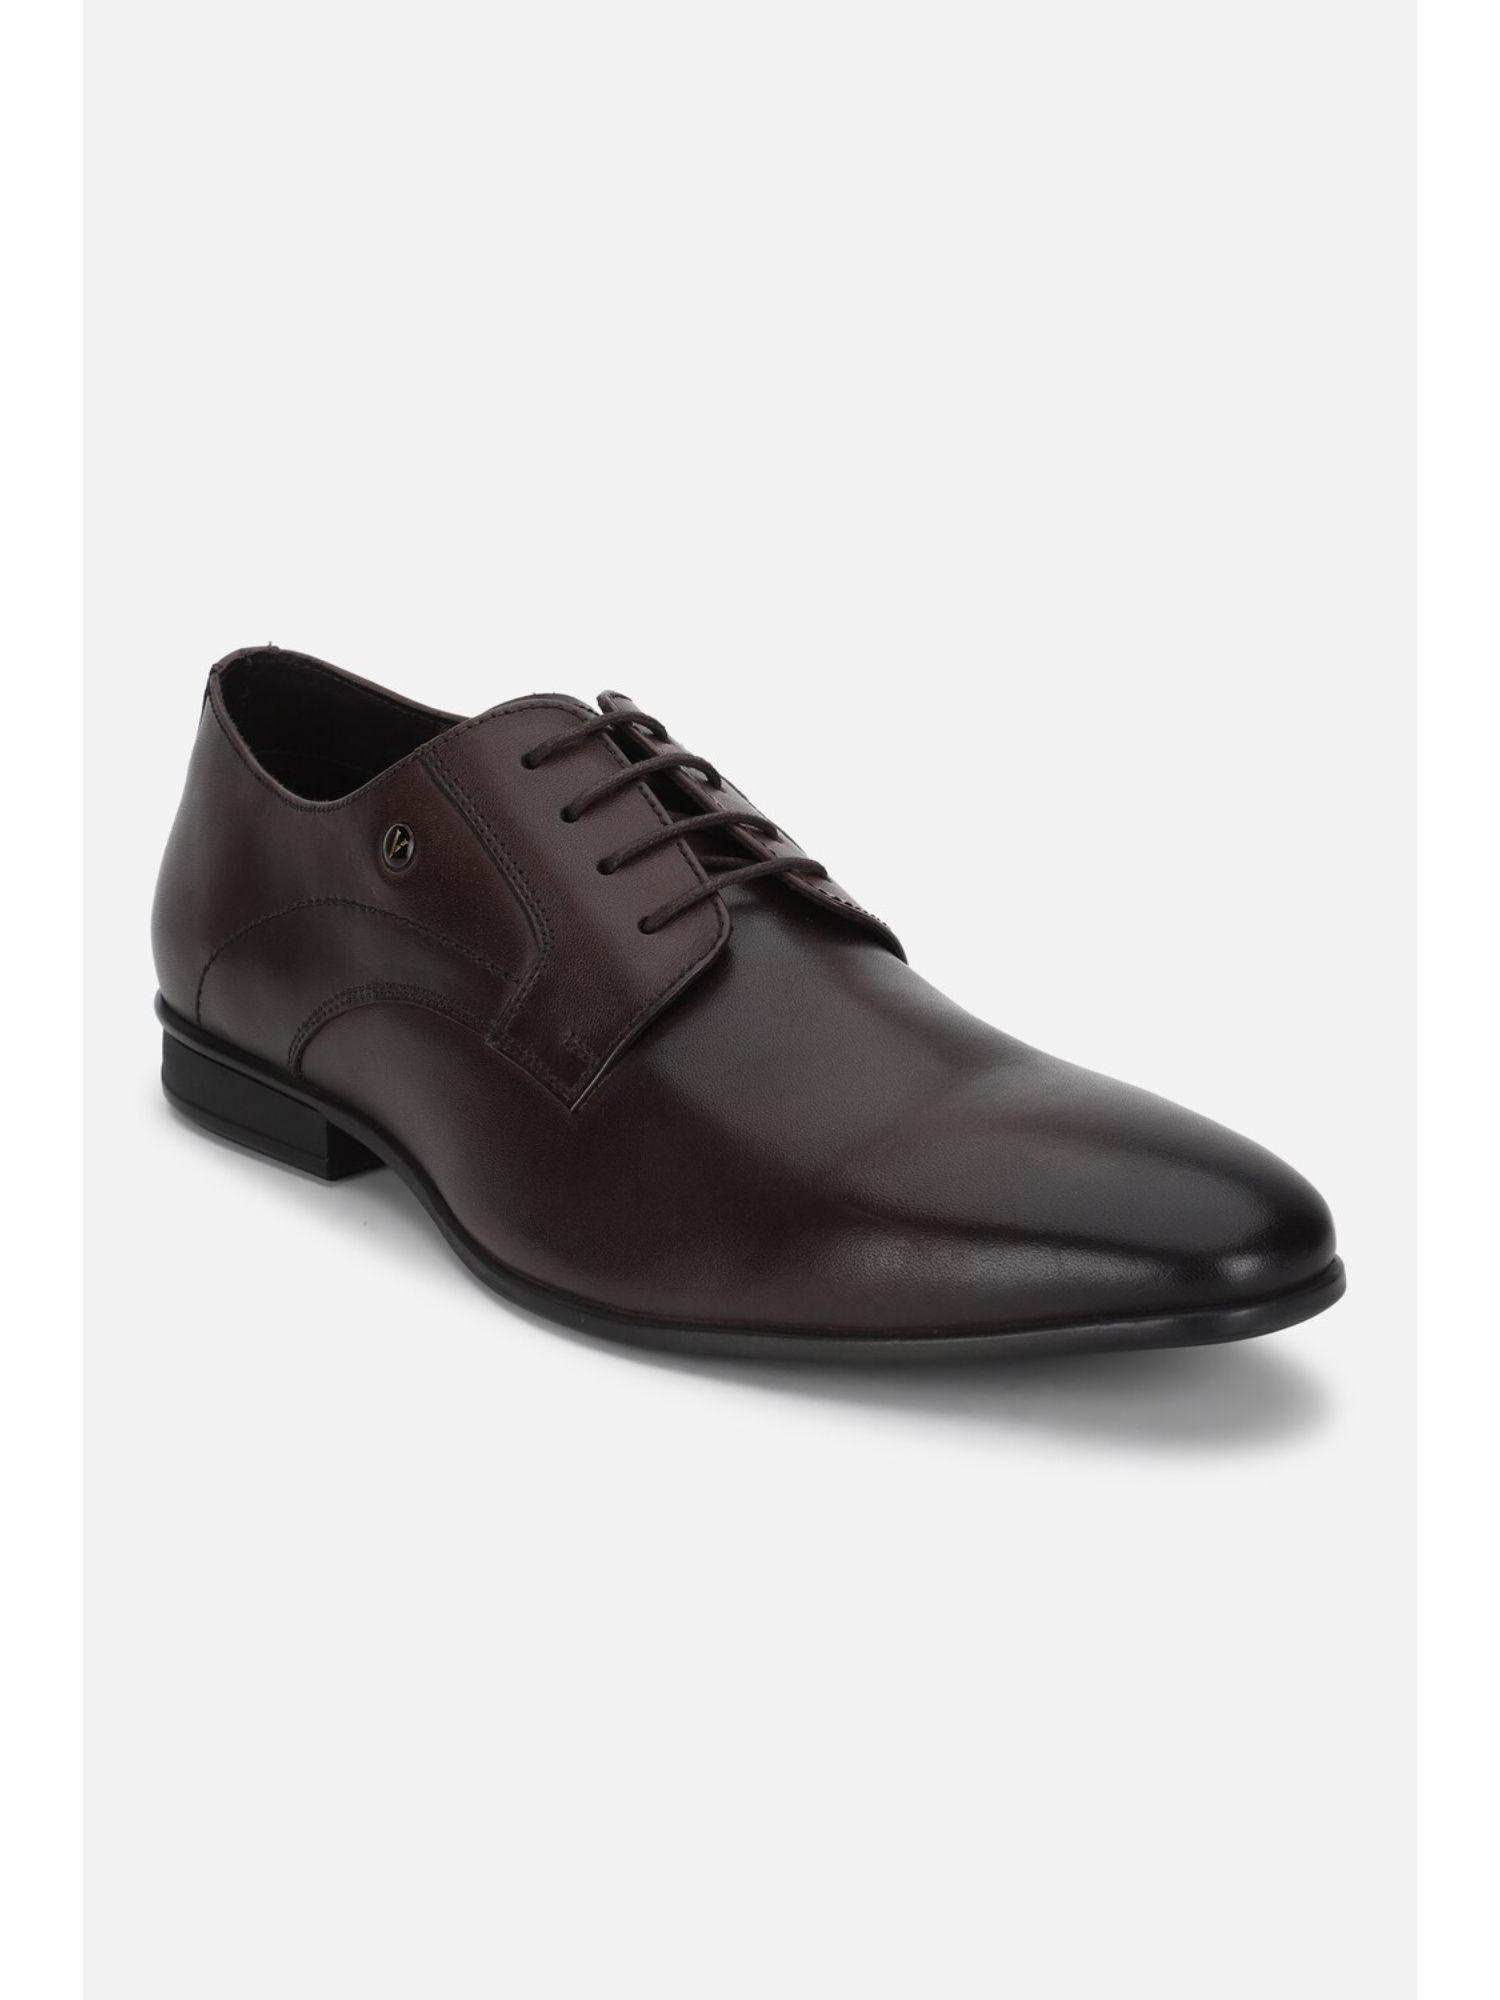 men brown formal oxford shoes